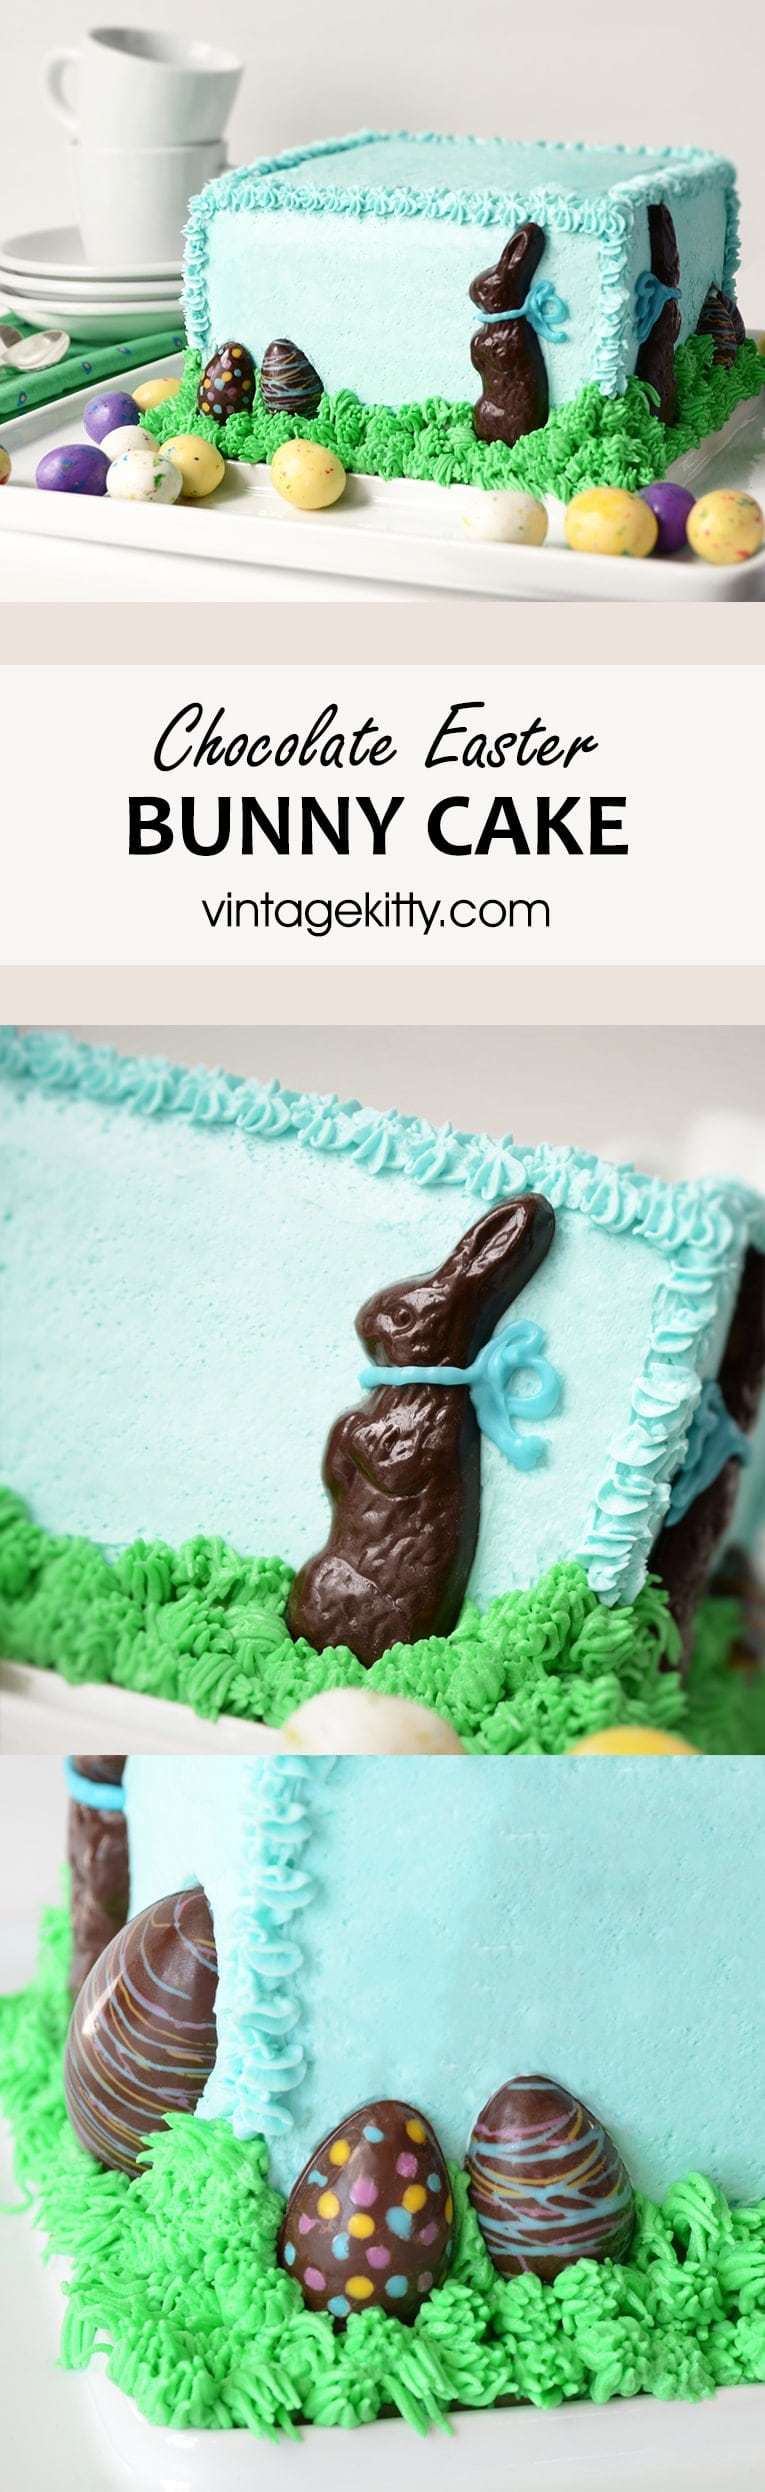 Chocolate Easter Bunny Cake Pin - Chocolate Easter Bunny Cake